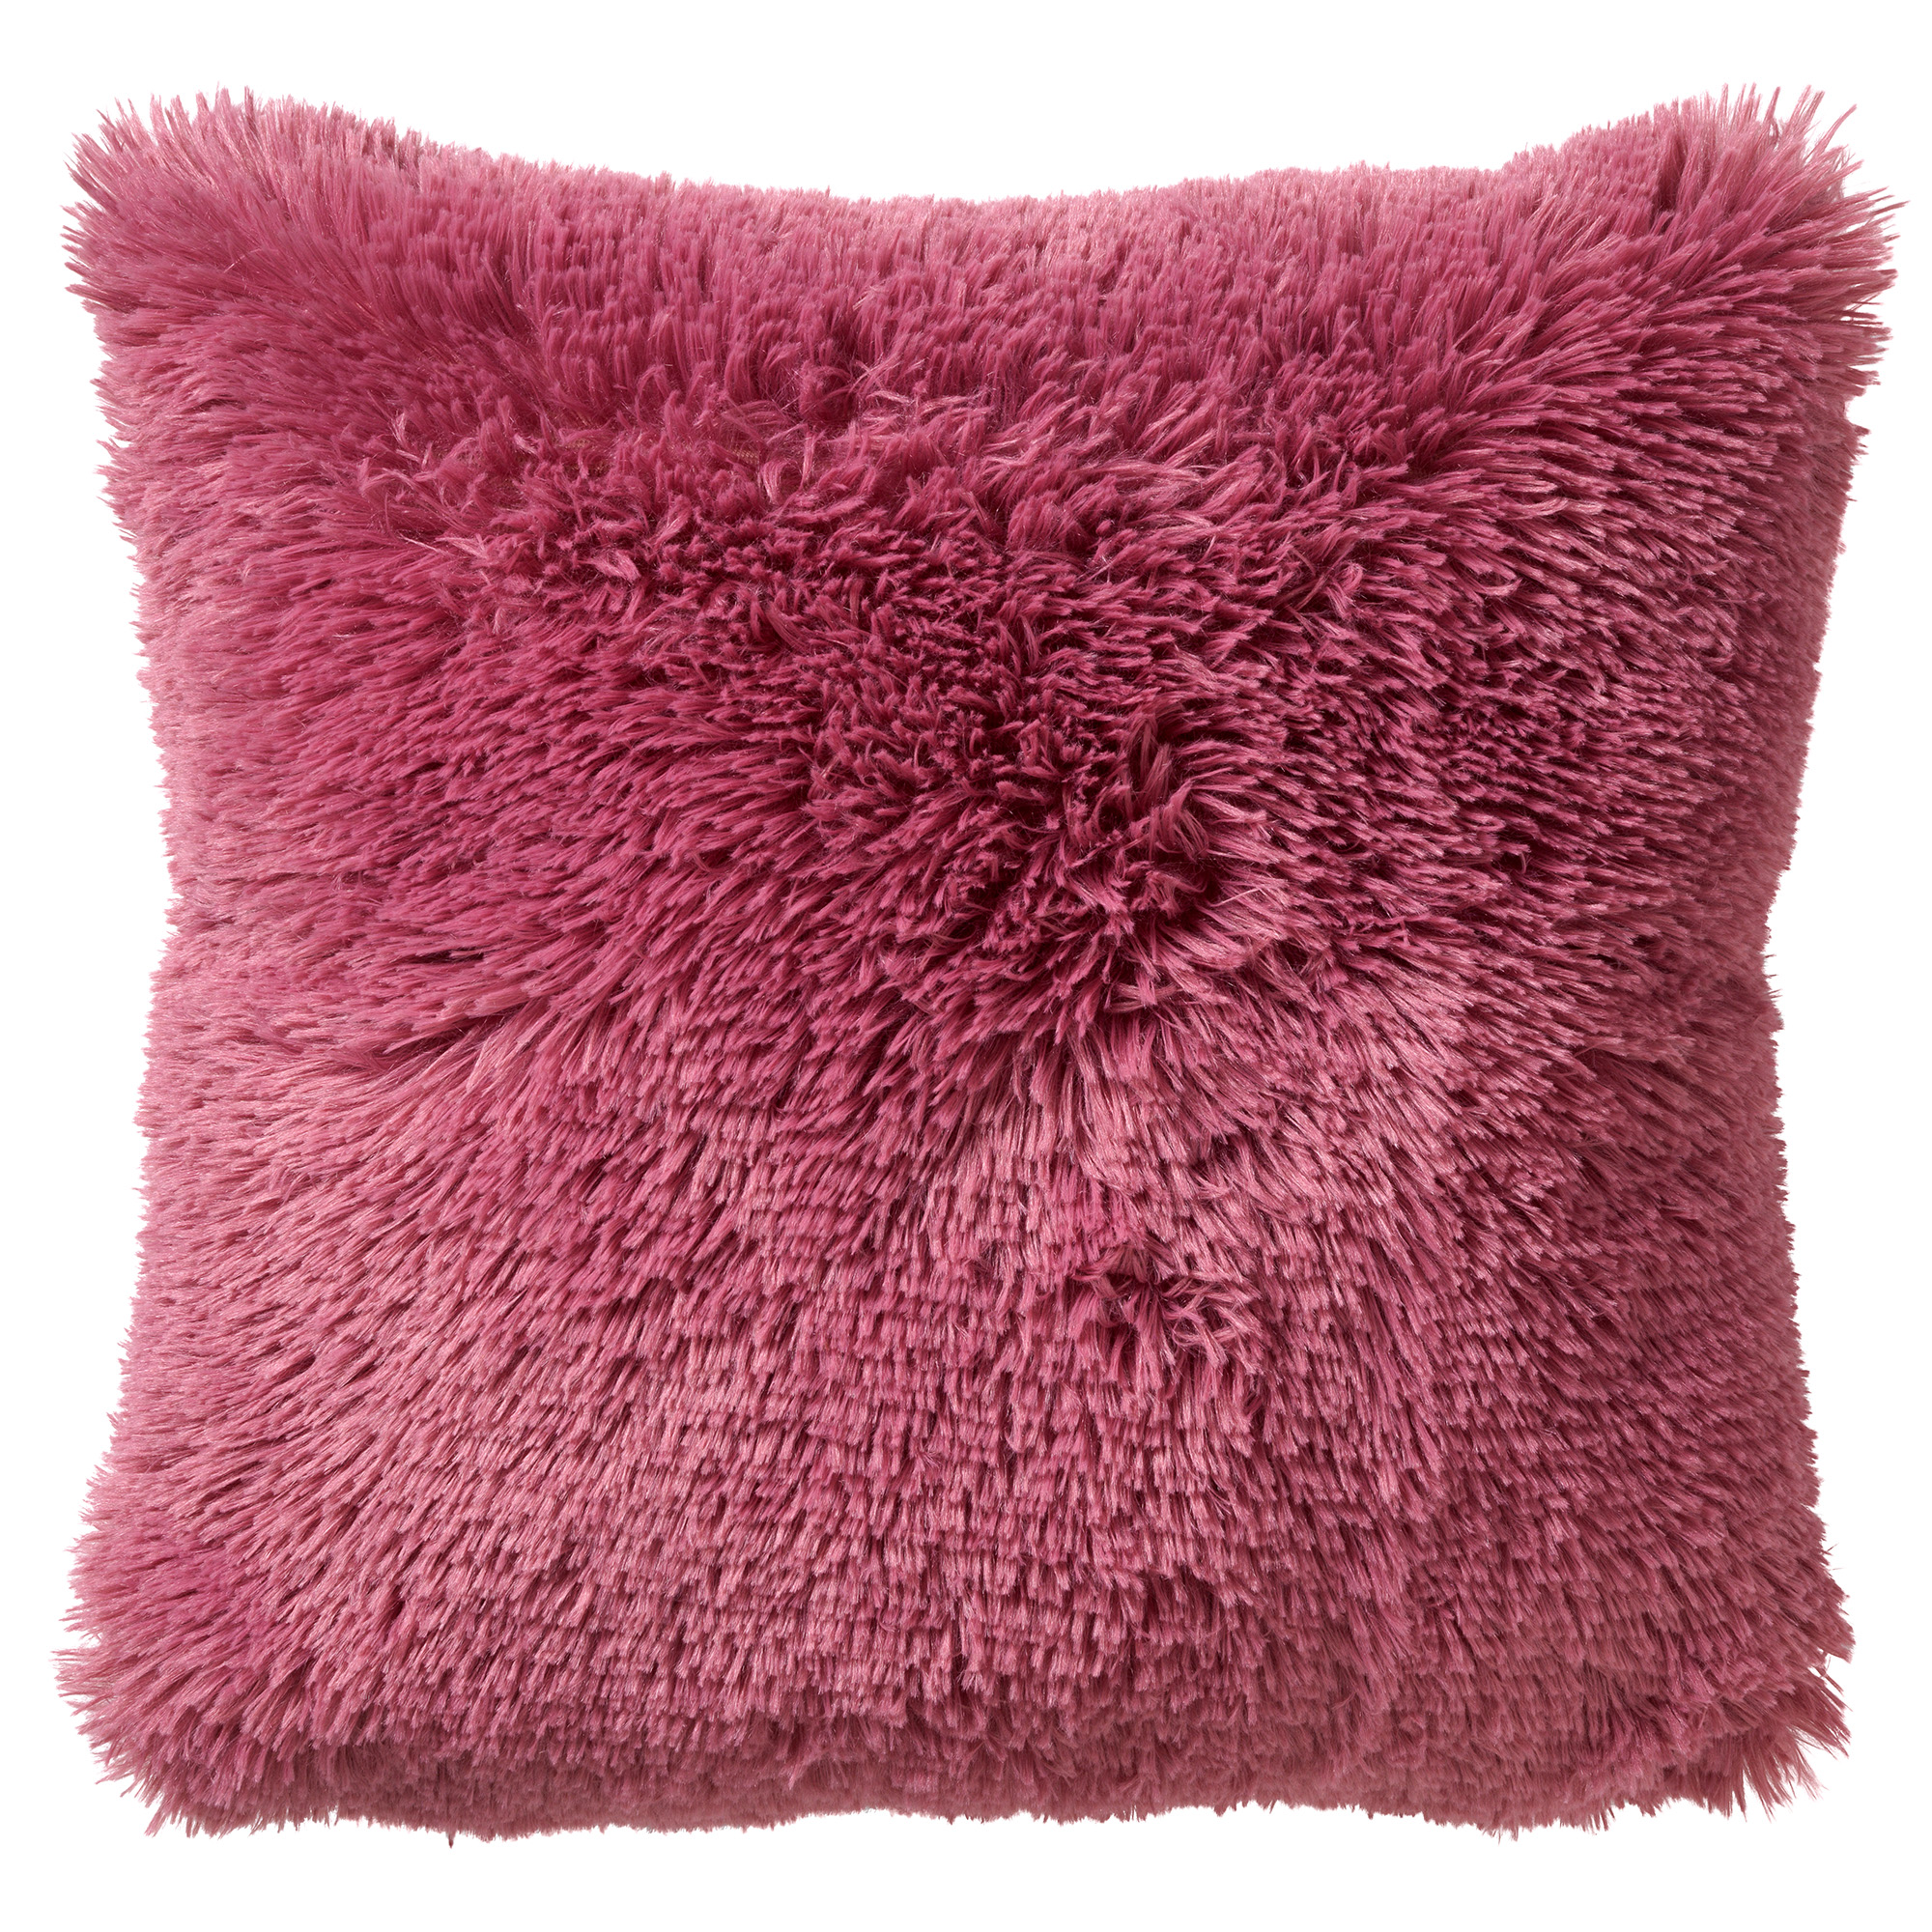 FLUFFY - Sierkussen unikleur Heather Rose 45x45 cm - roze